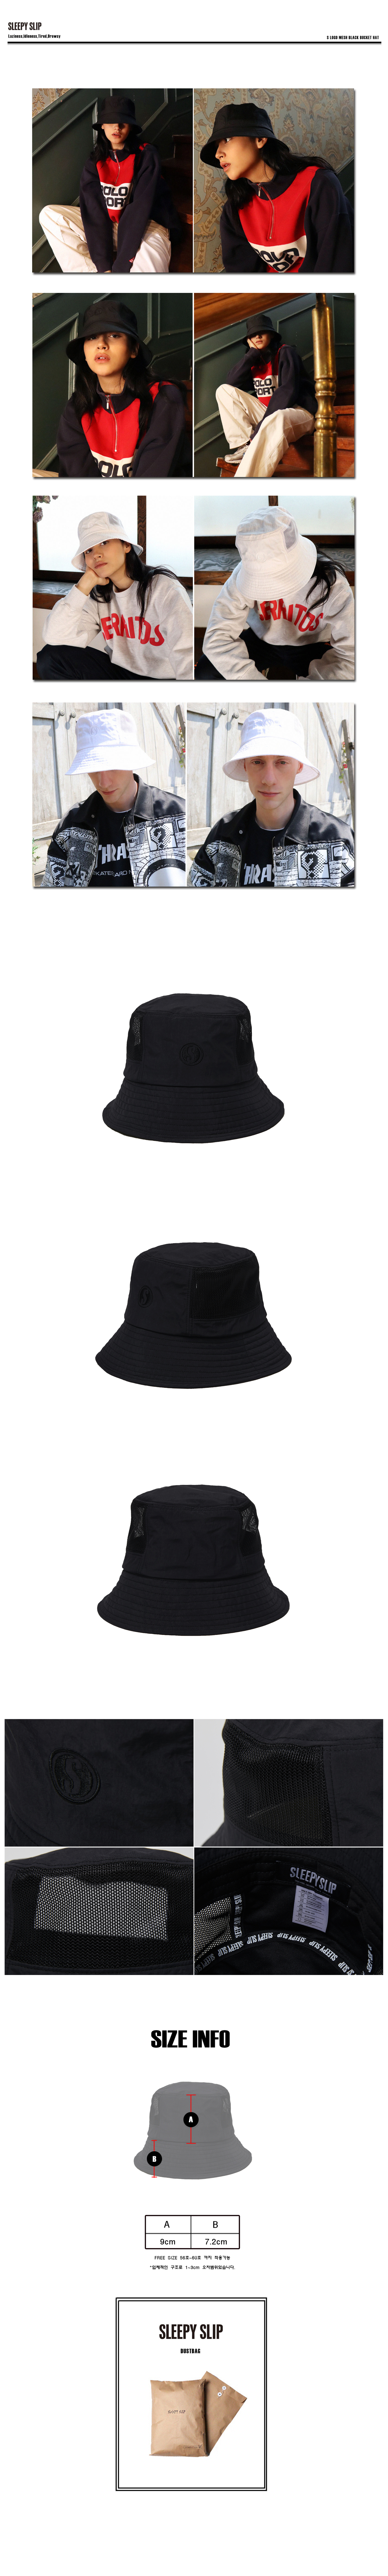 S LOGO MASH BLACK BUCKET HAT